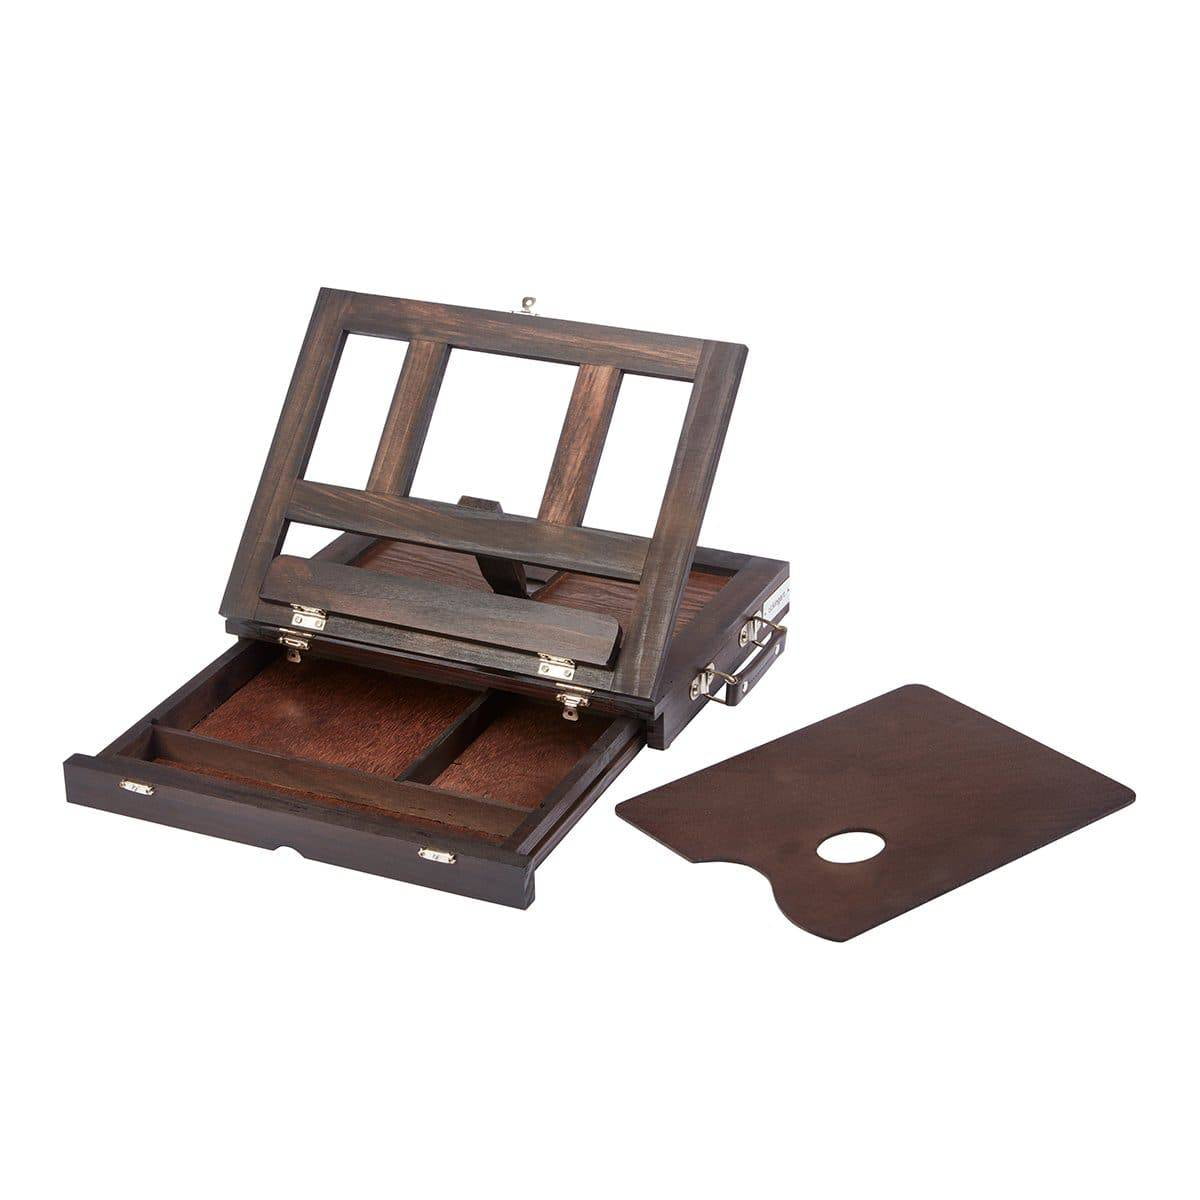 KINGART® Artists Studio 16 Mini Tabletop Wooden H-Frame Easel